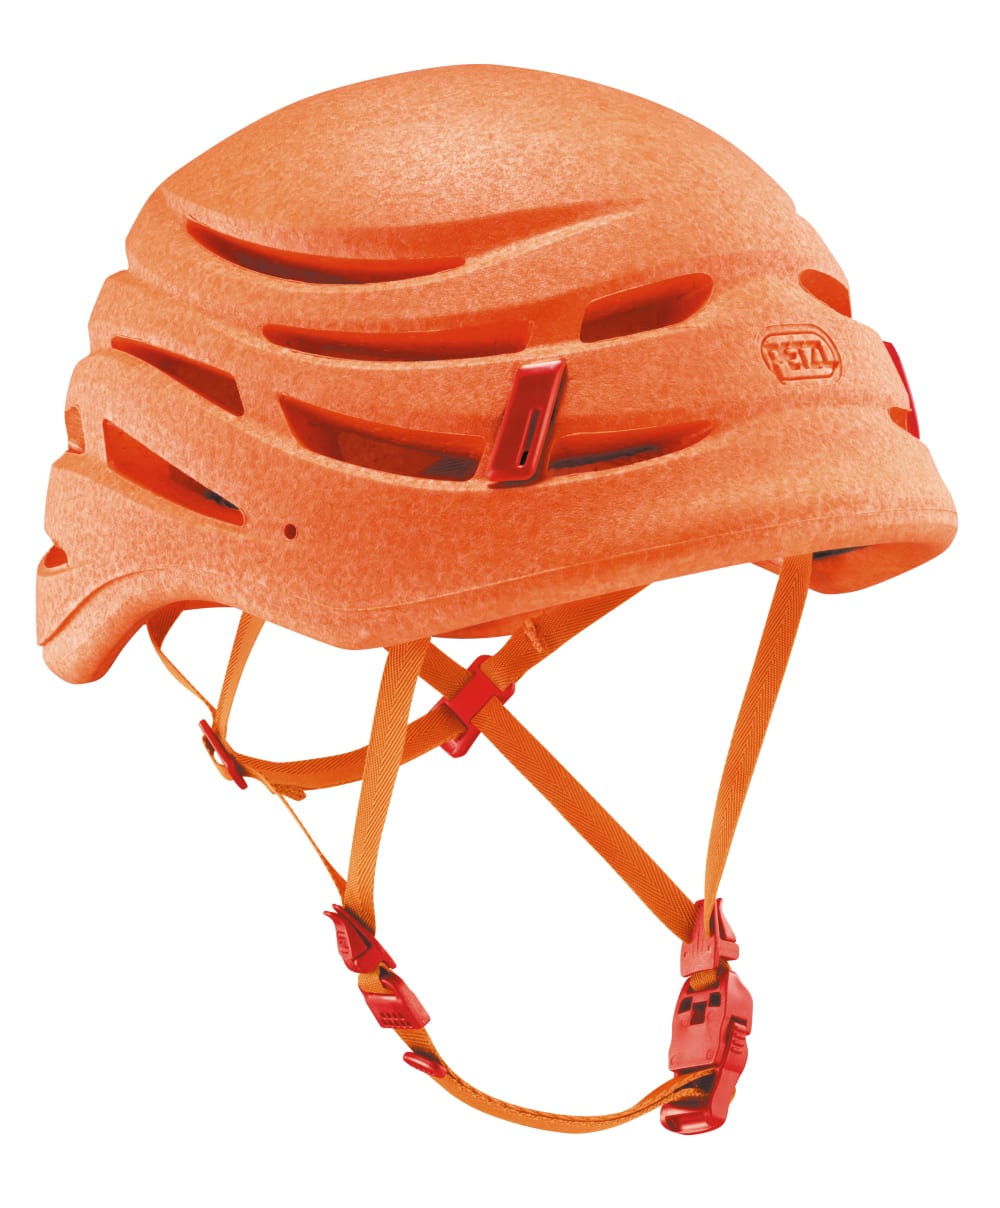 Petzl Sirocco Climbing Helmet